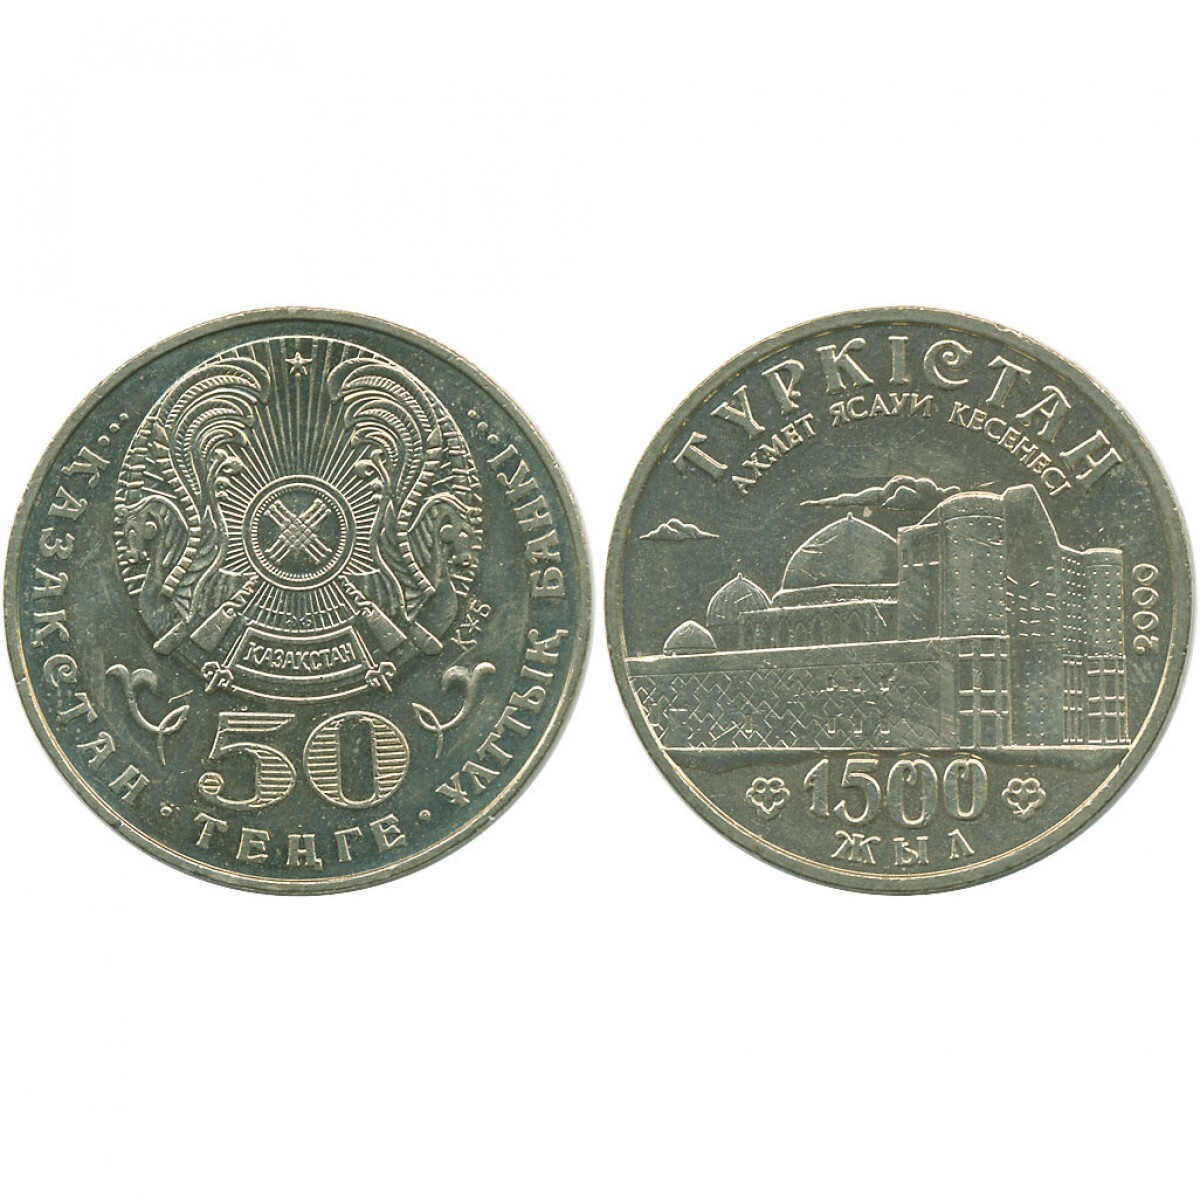 Казахстан 1999 года. Казахстан 50 тенге, 1999. 50 Тенге 2000 года в рублях. Монеты 1500 года. 50 Тенге в рублях.